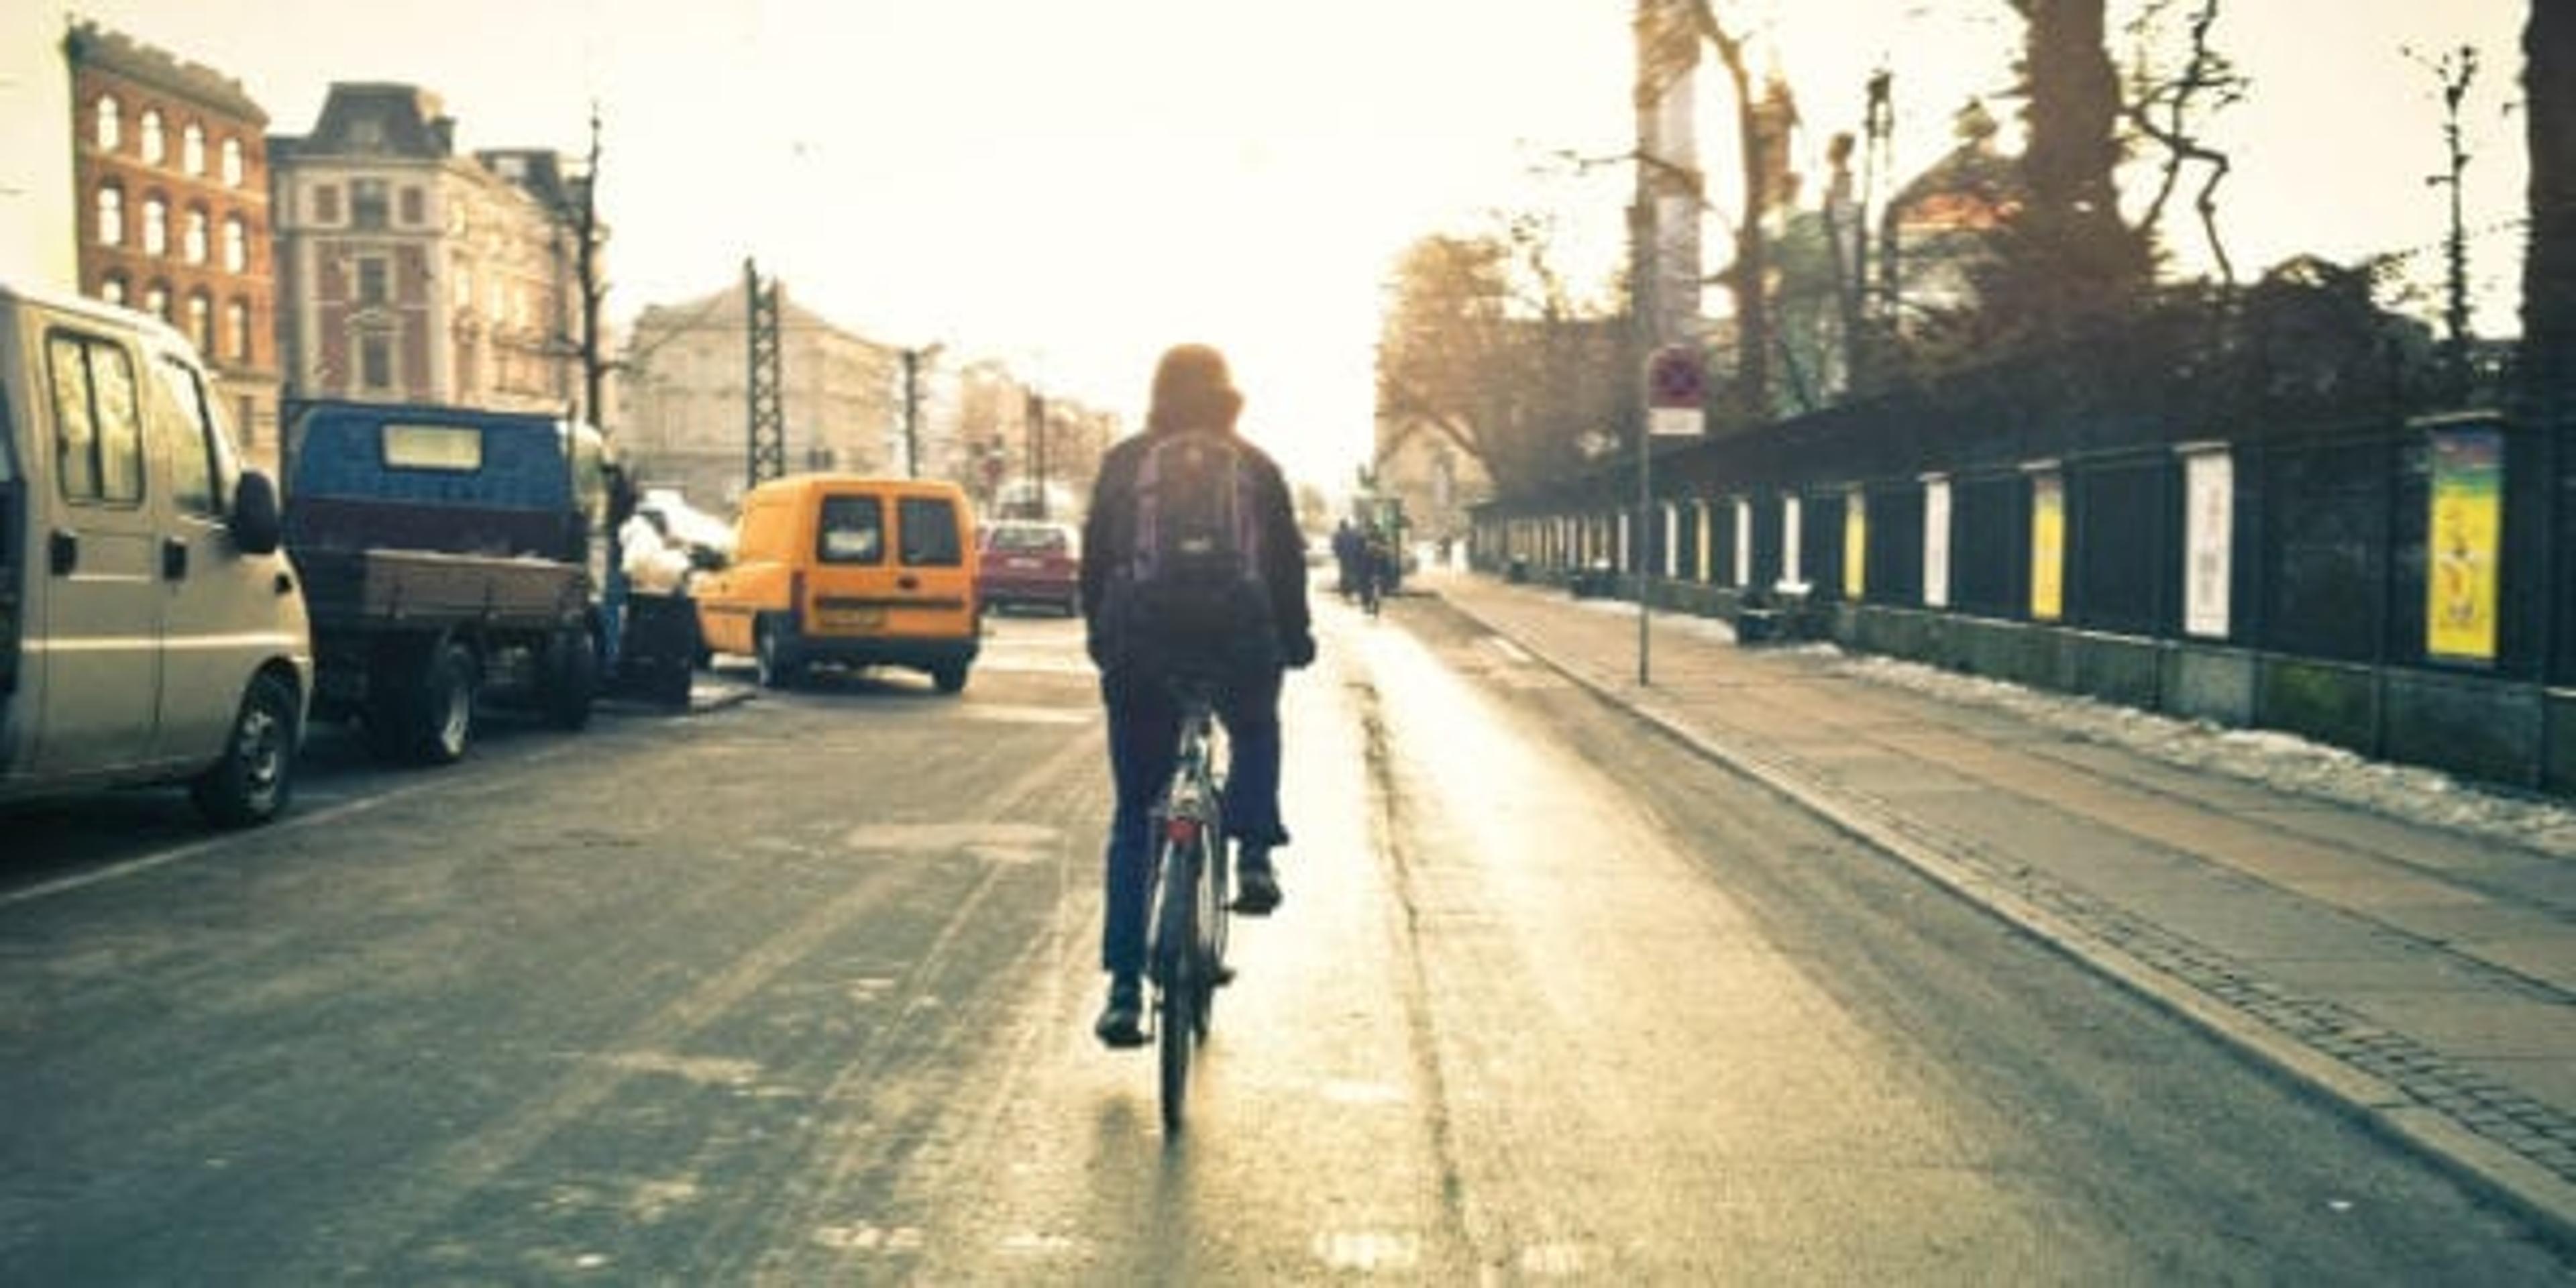 sunrise bike ride on a street